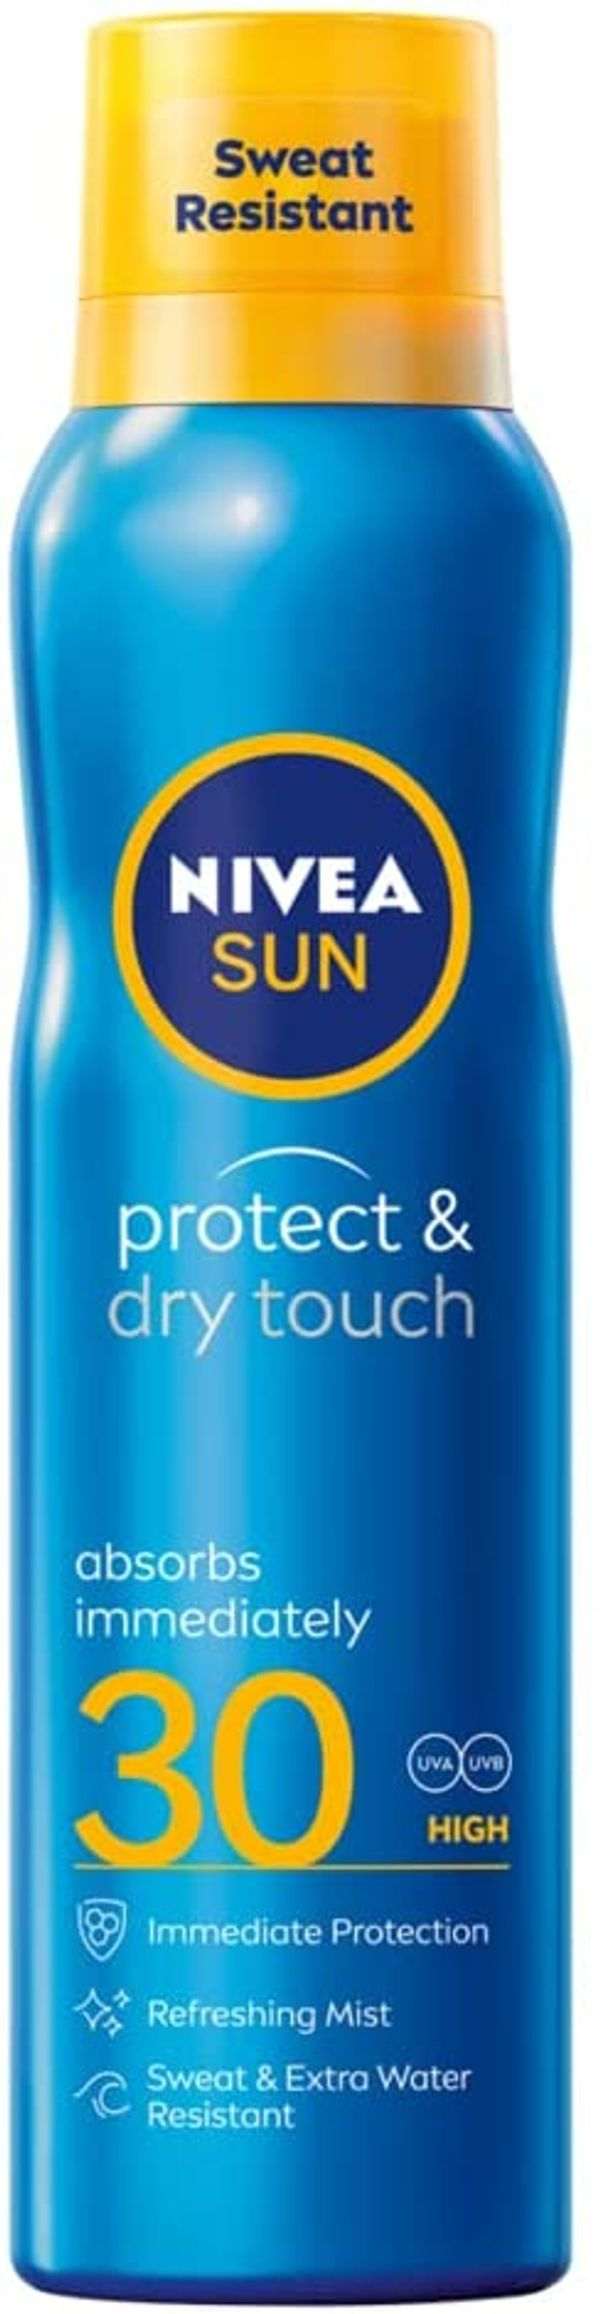 Nivea Sun Dry Touch Protection Spray SPF30 bottle